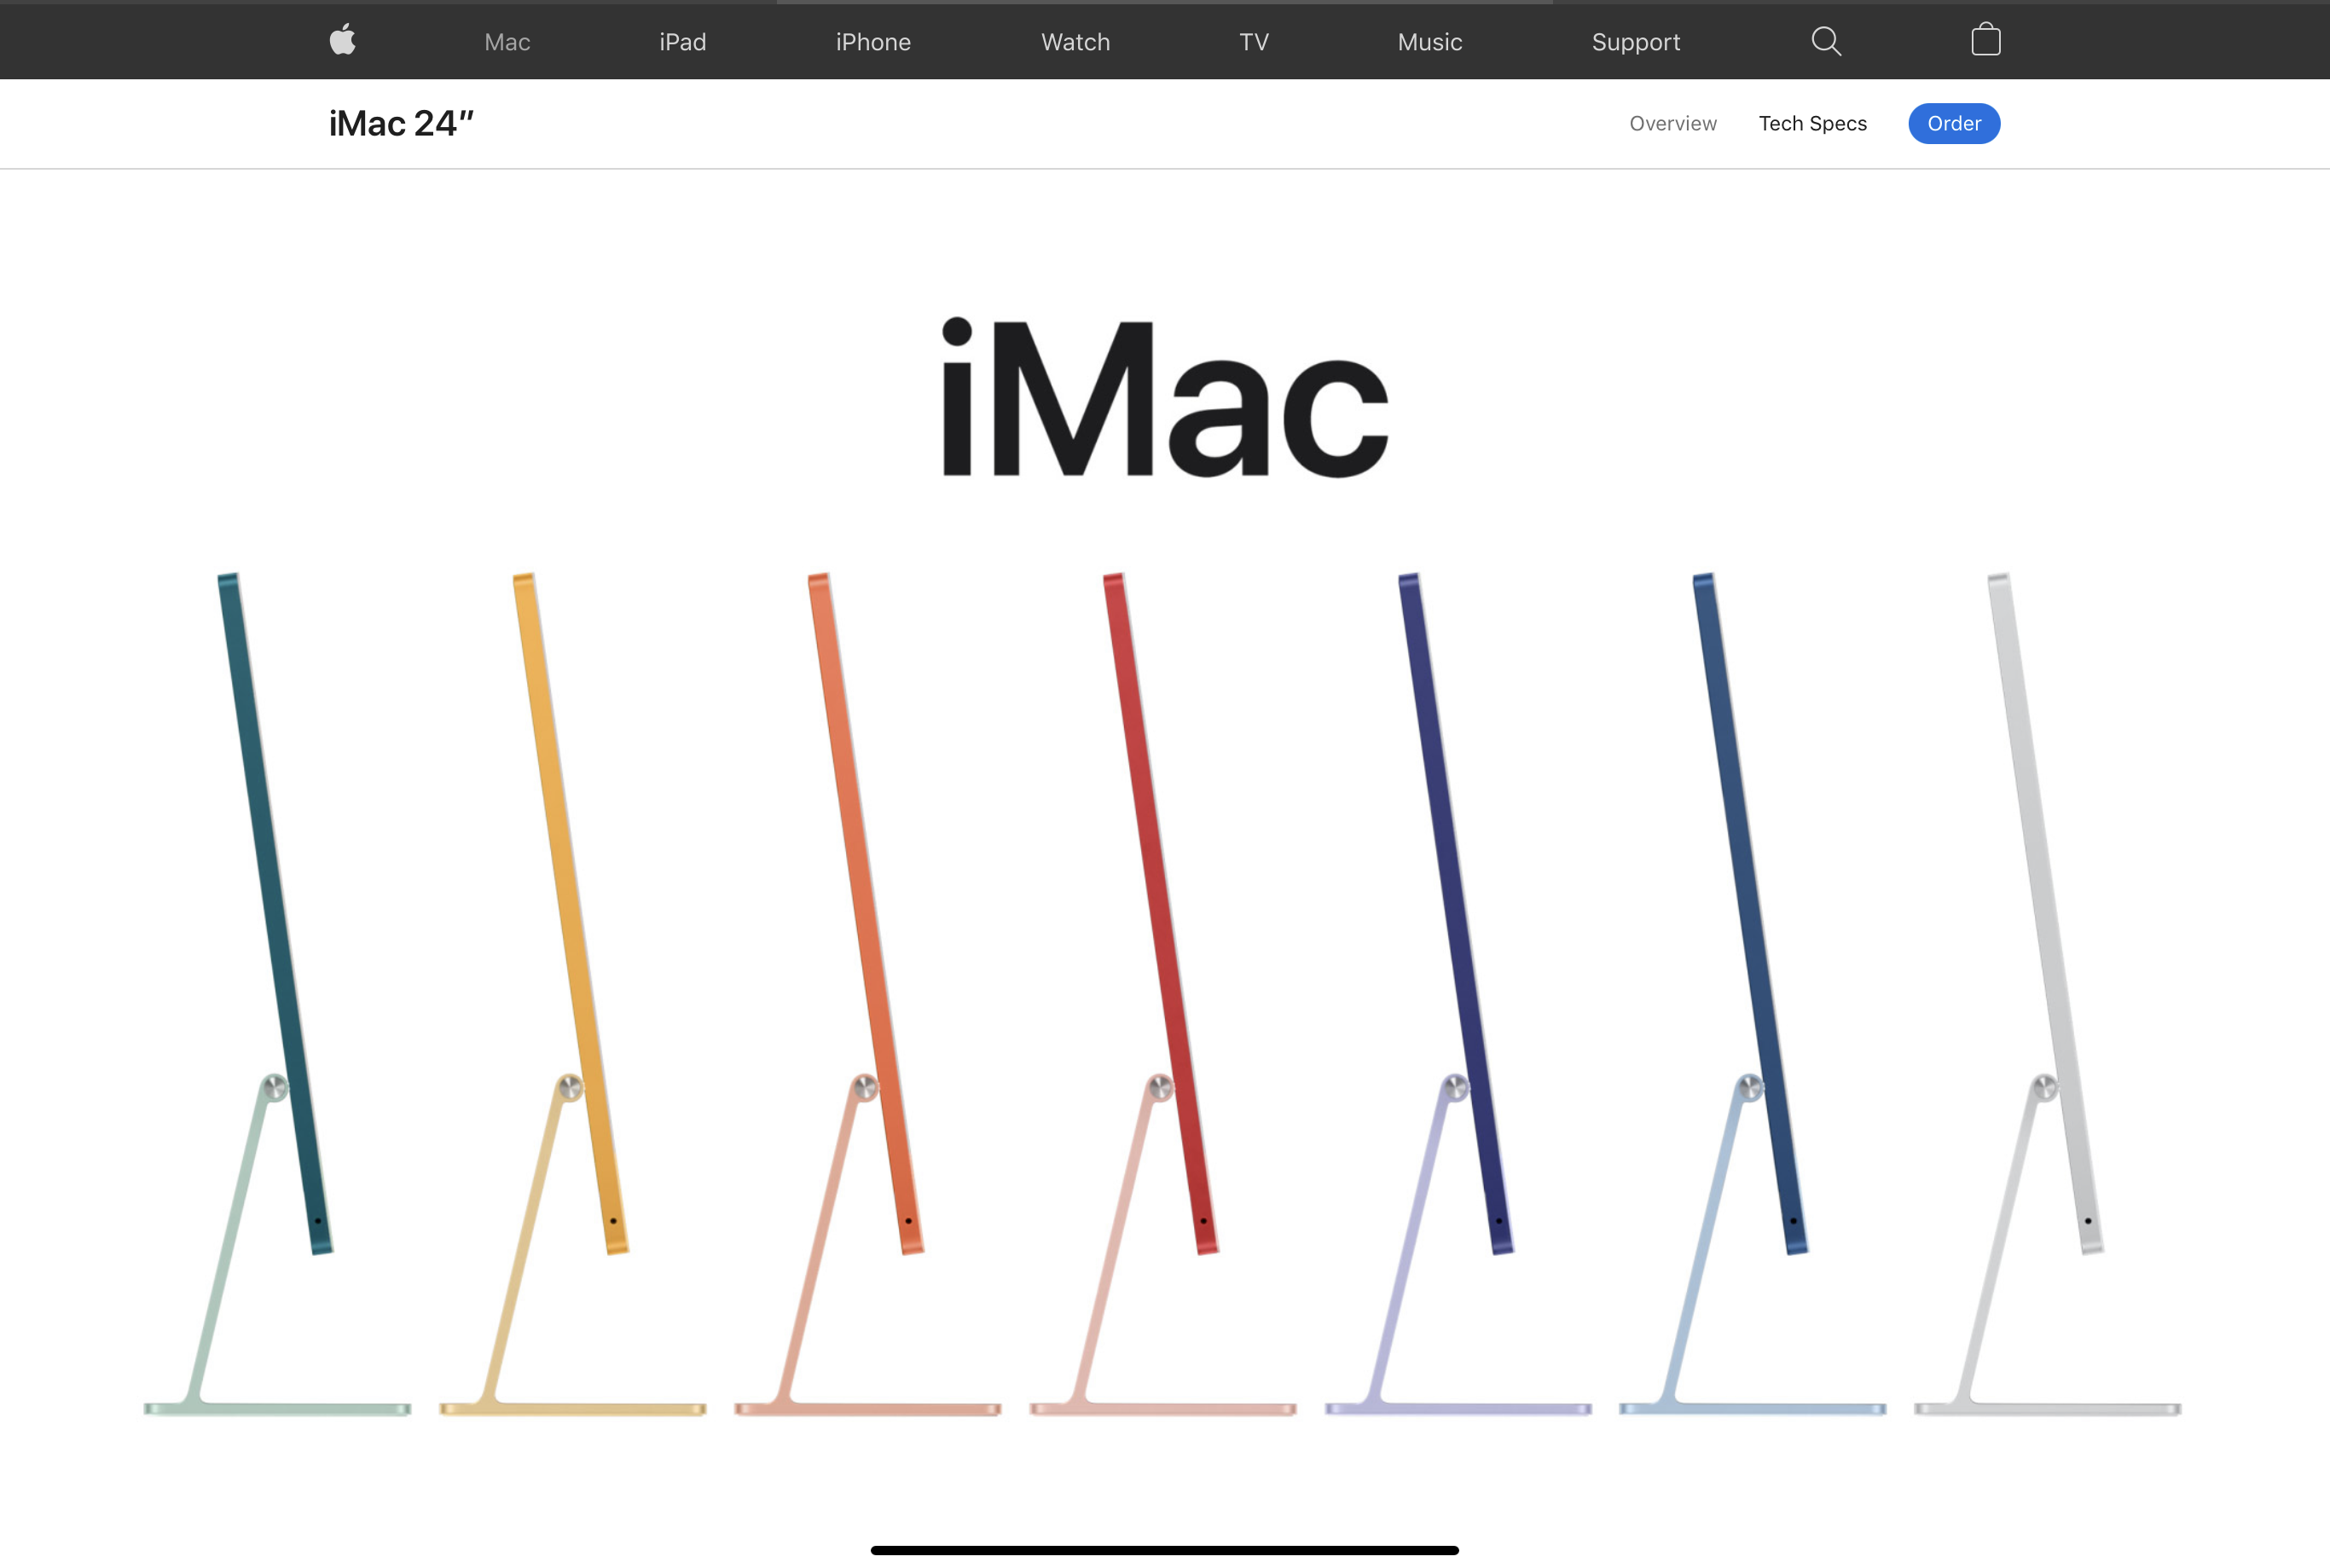 Apple iMac Hero Image Product Page